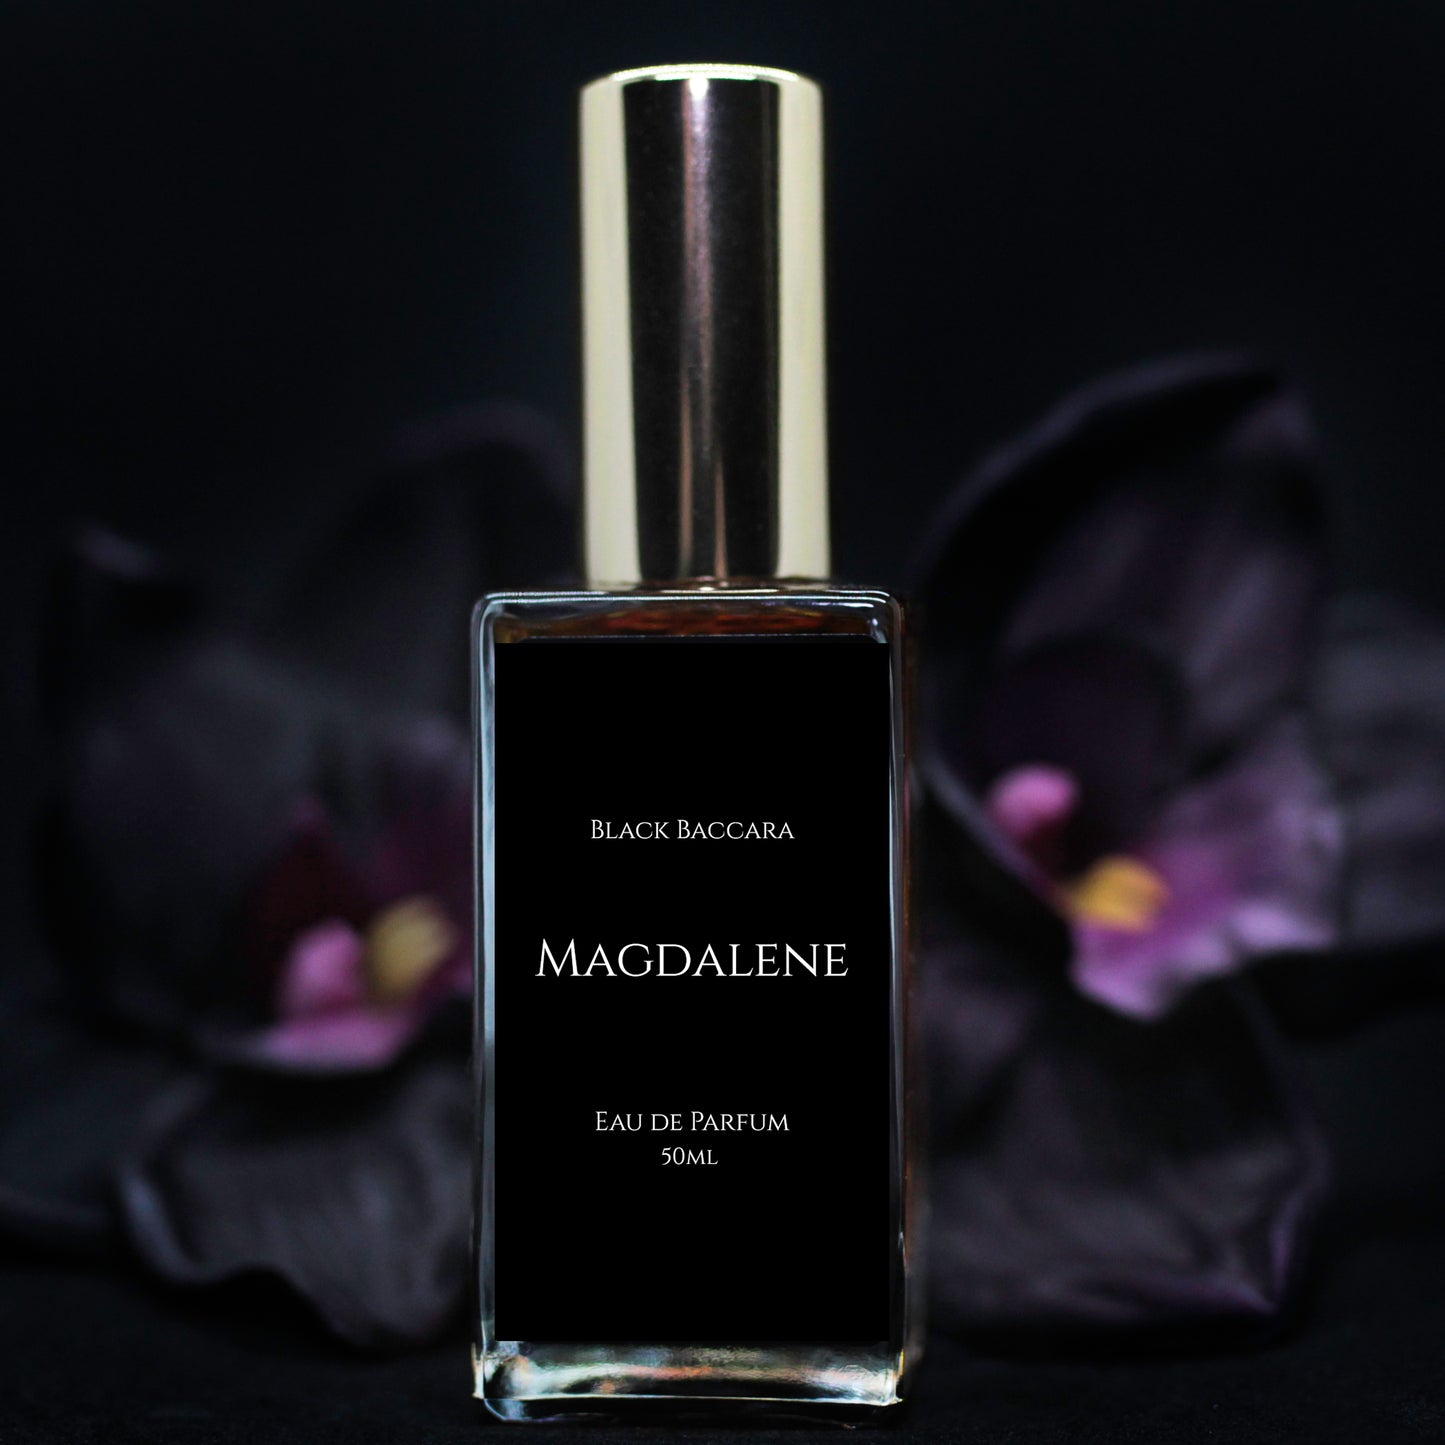 Magdalene perfume